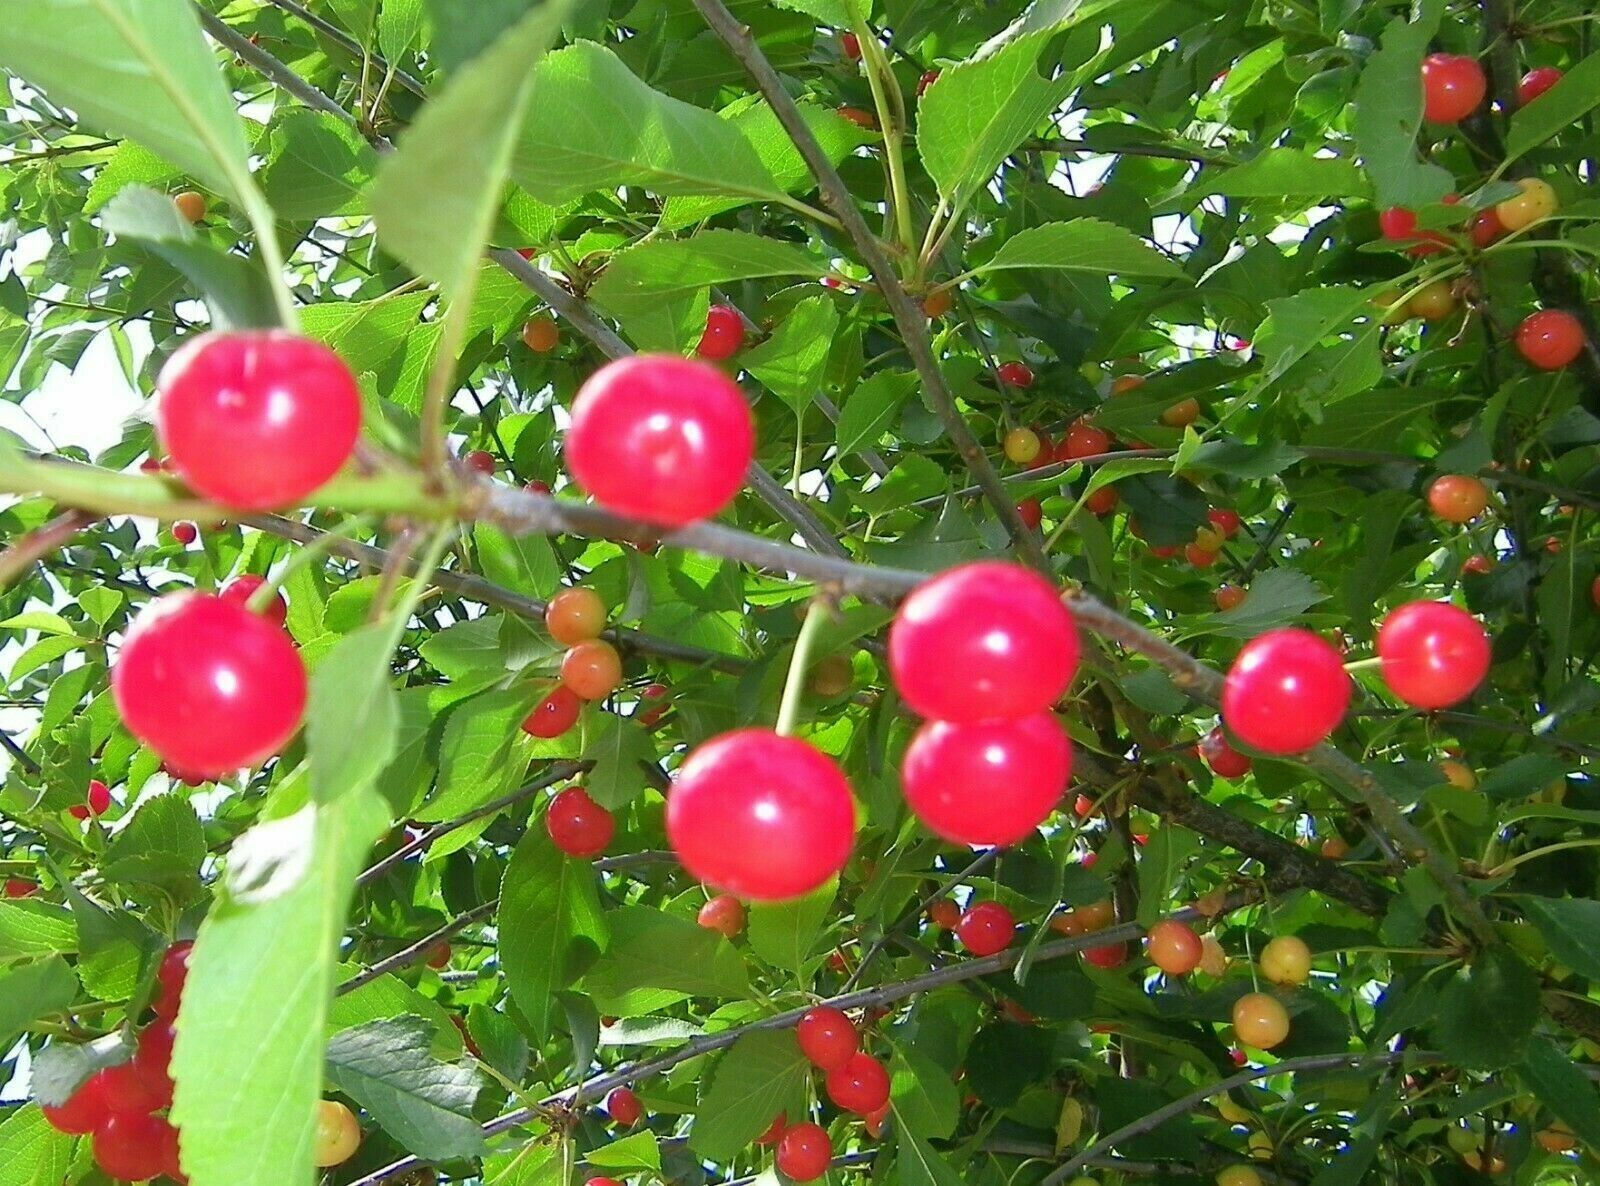 British Columbia Early Richmond Cherry Tree Seeds - High Yielding Juicy Cherry